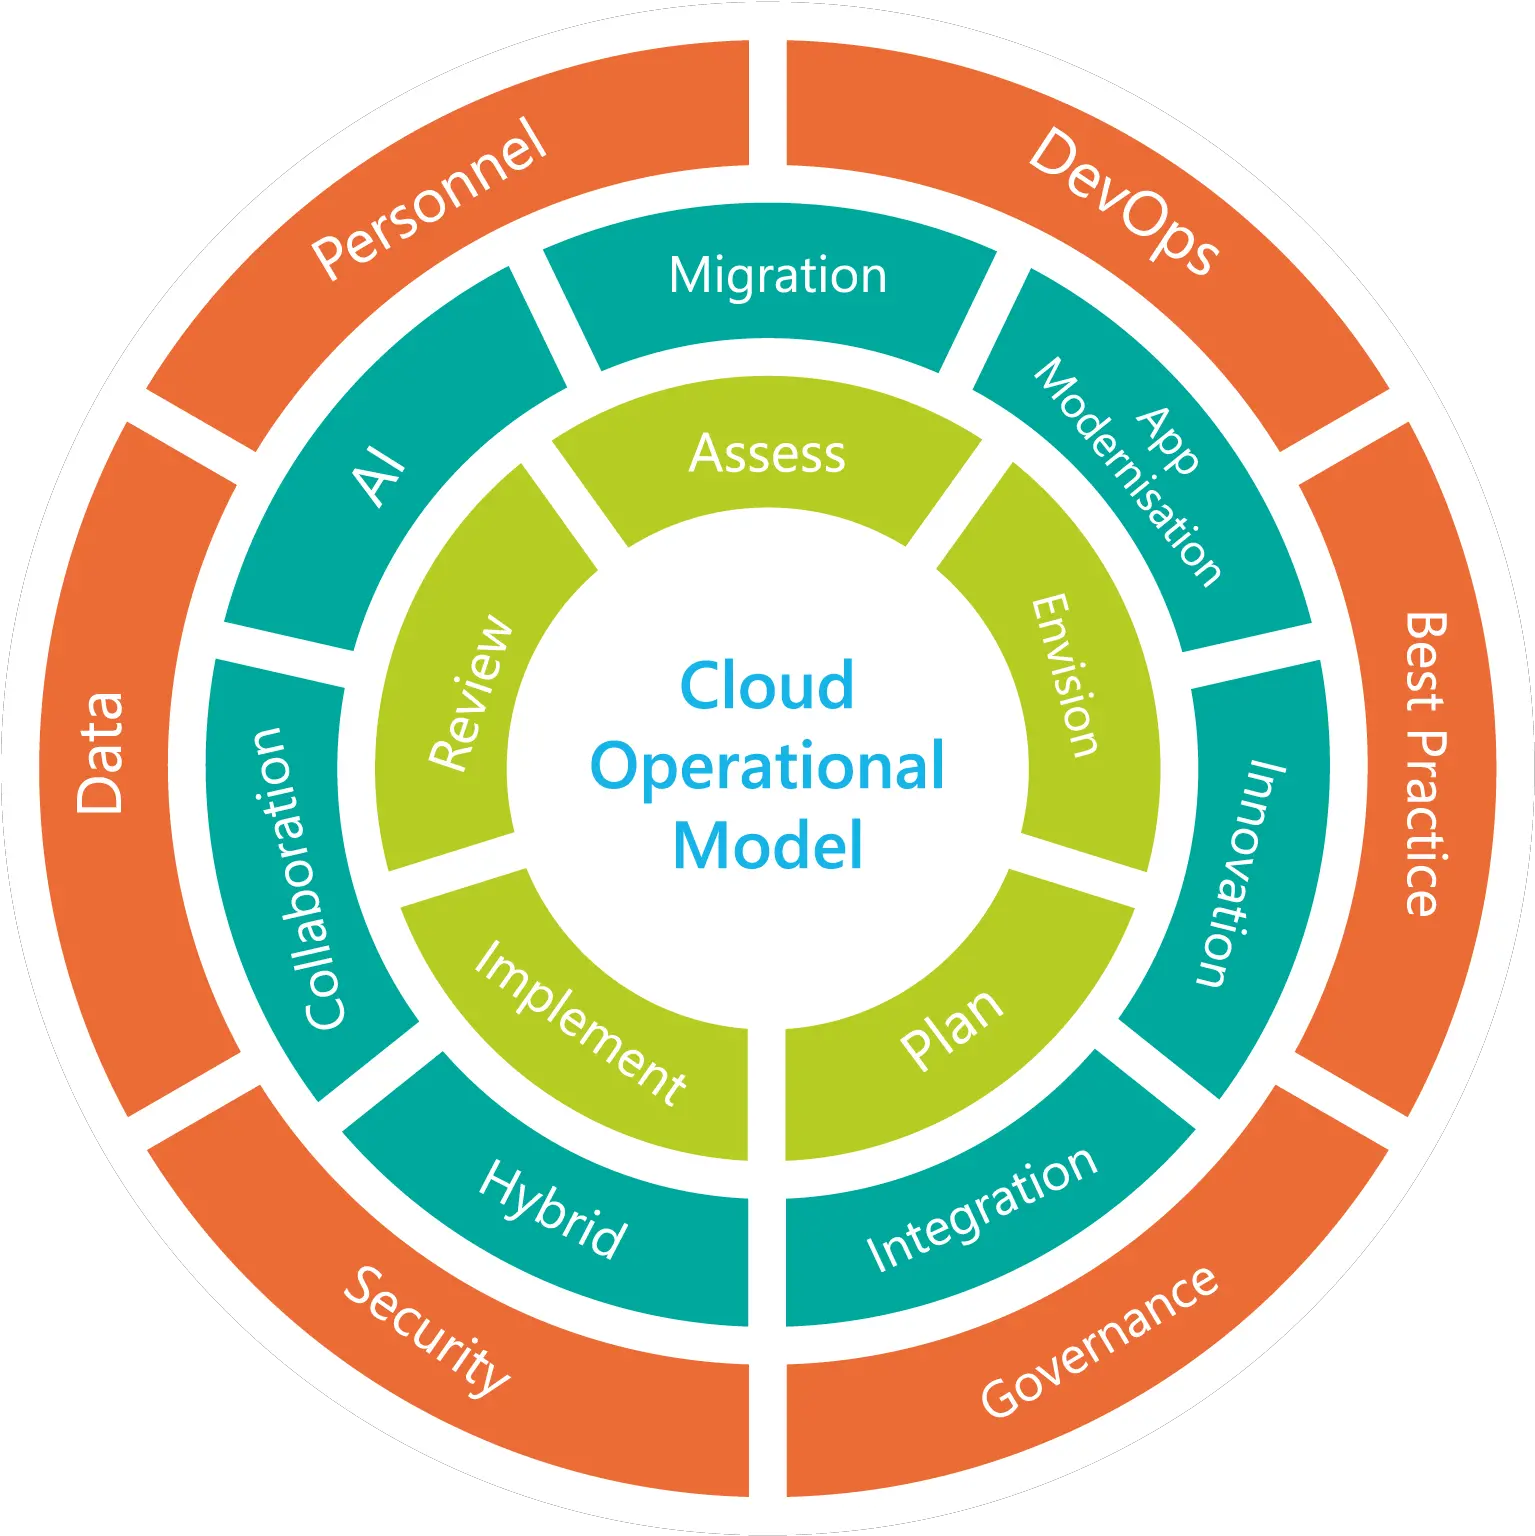 Cloud Operating Model Png